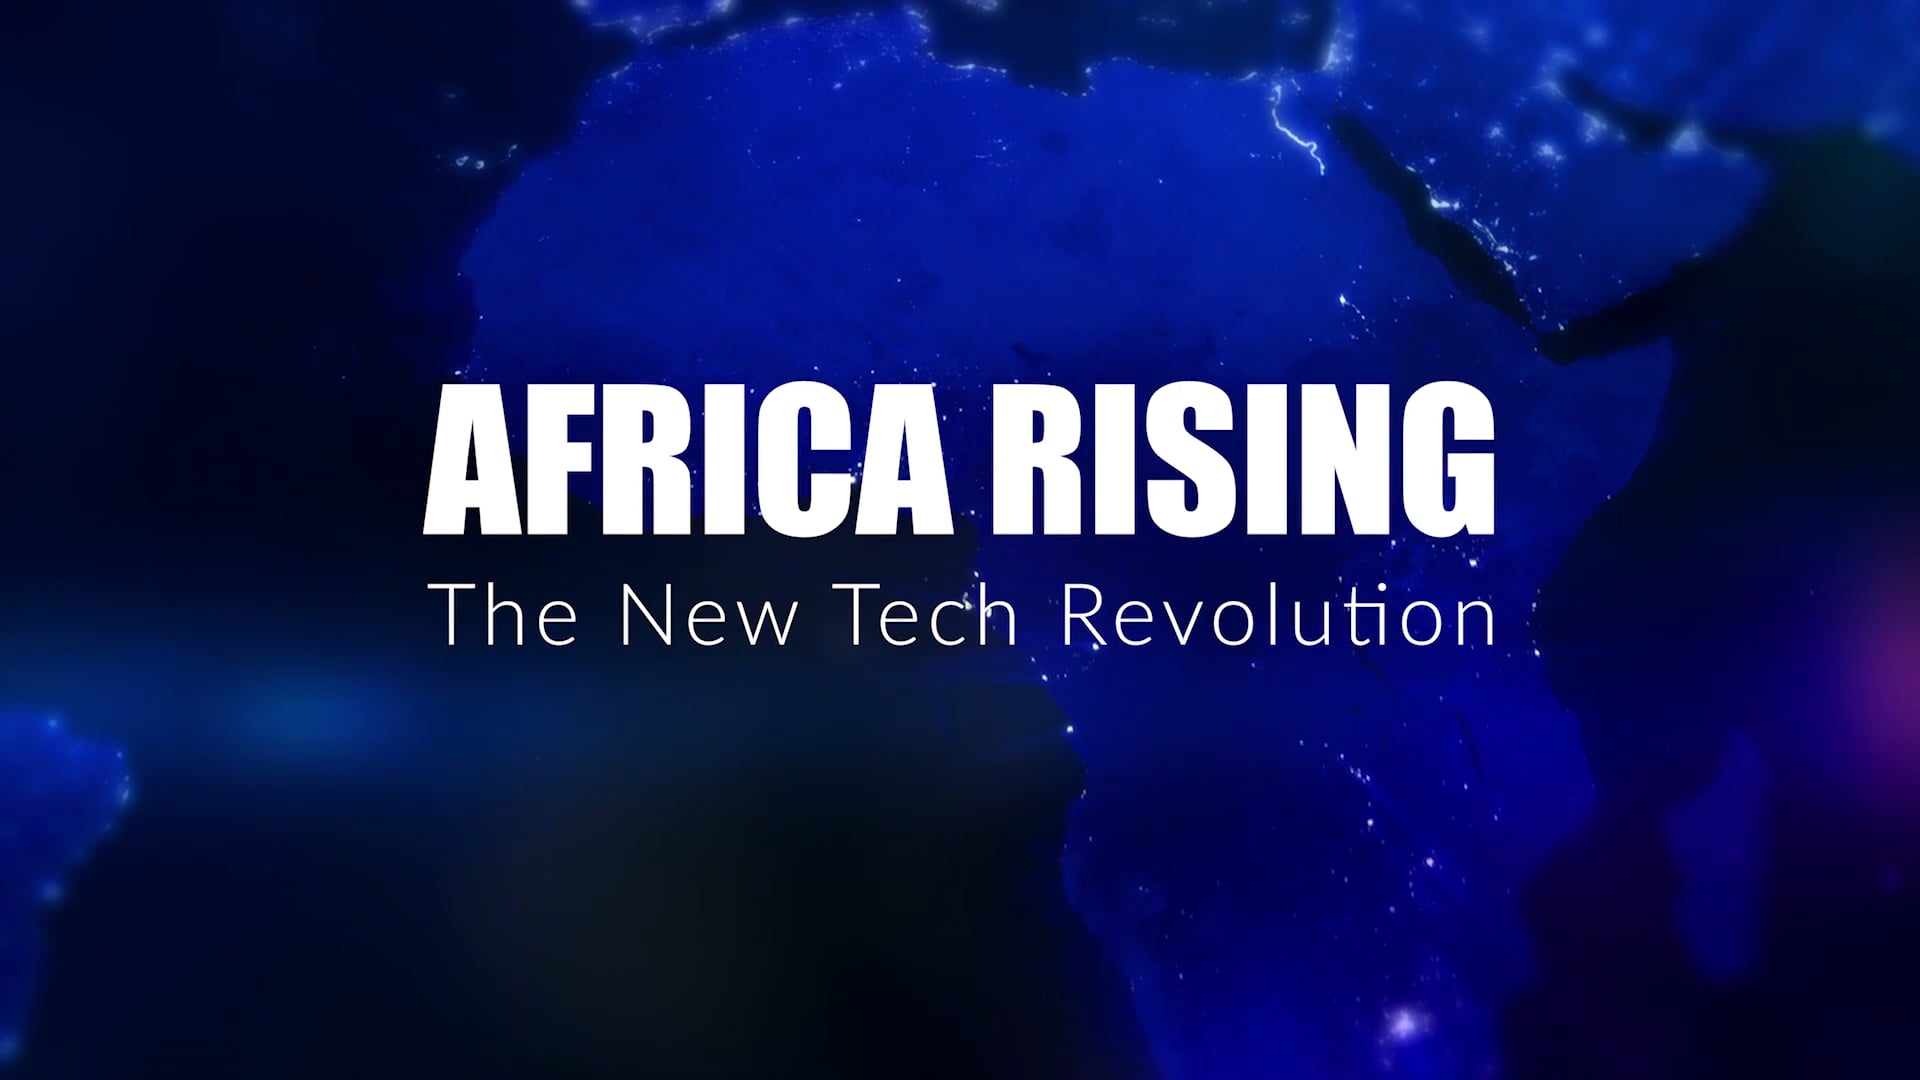 Africa Rising -The New Tech Revolution - Documentary Trailer